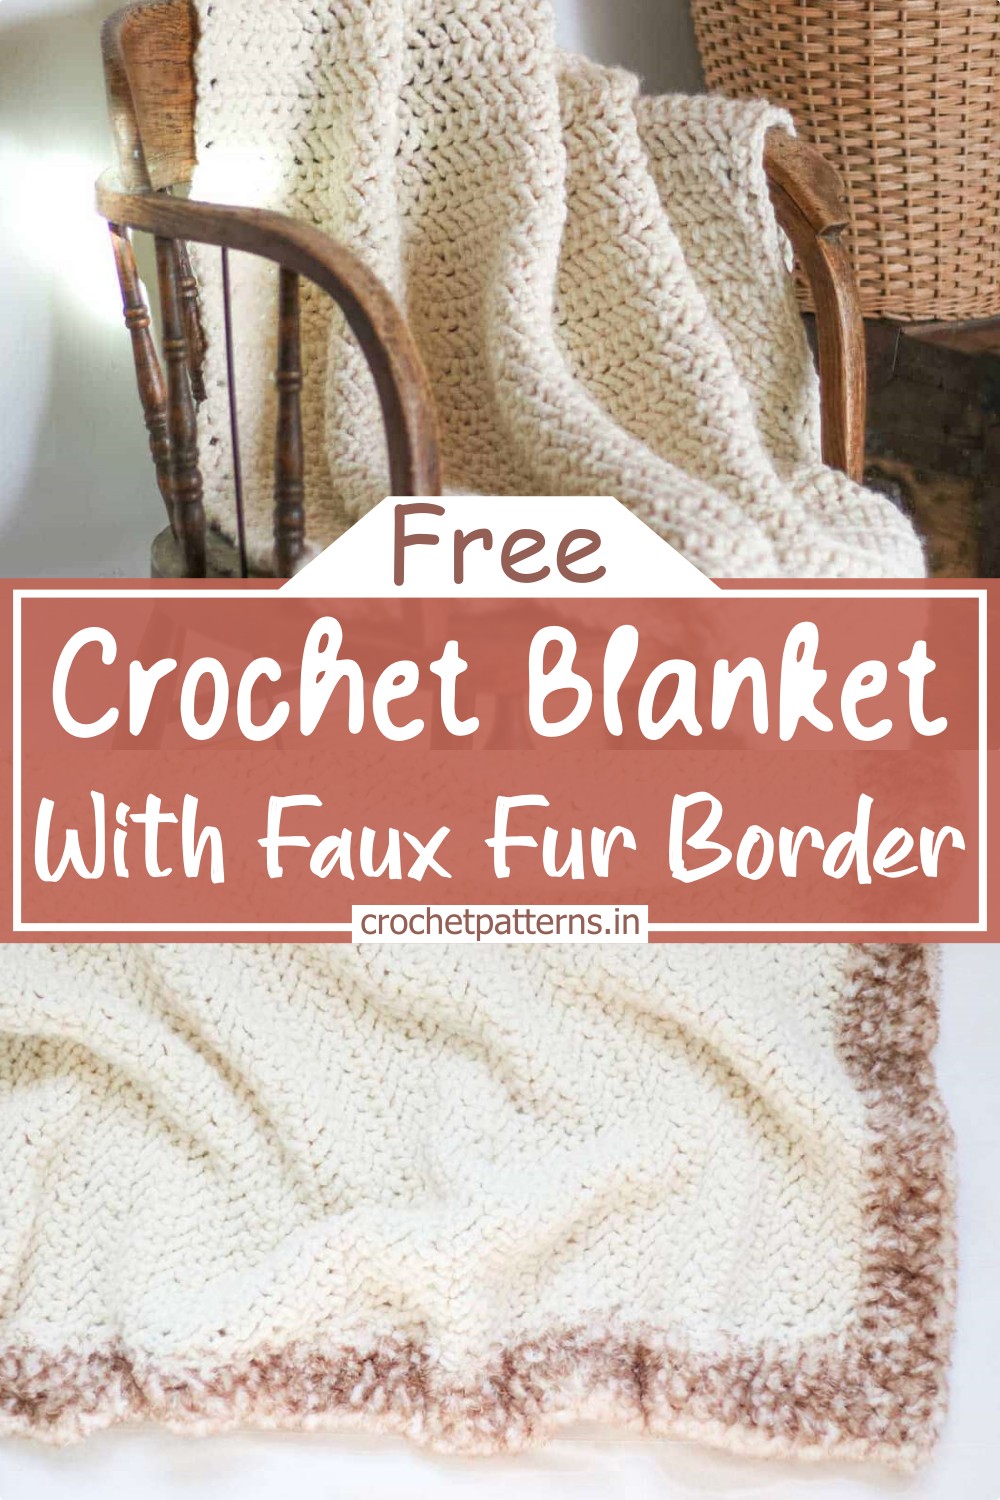 Crochet Blanket With Faux Fur Border